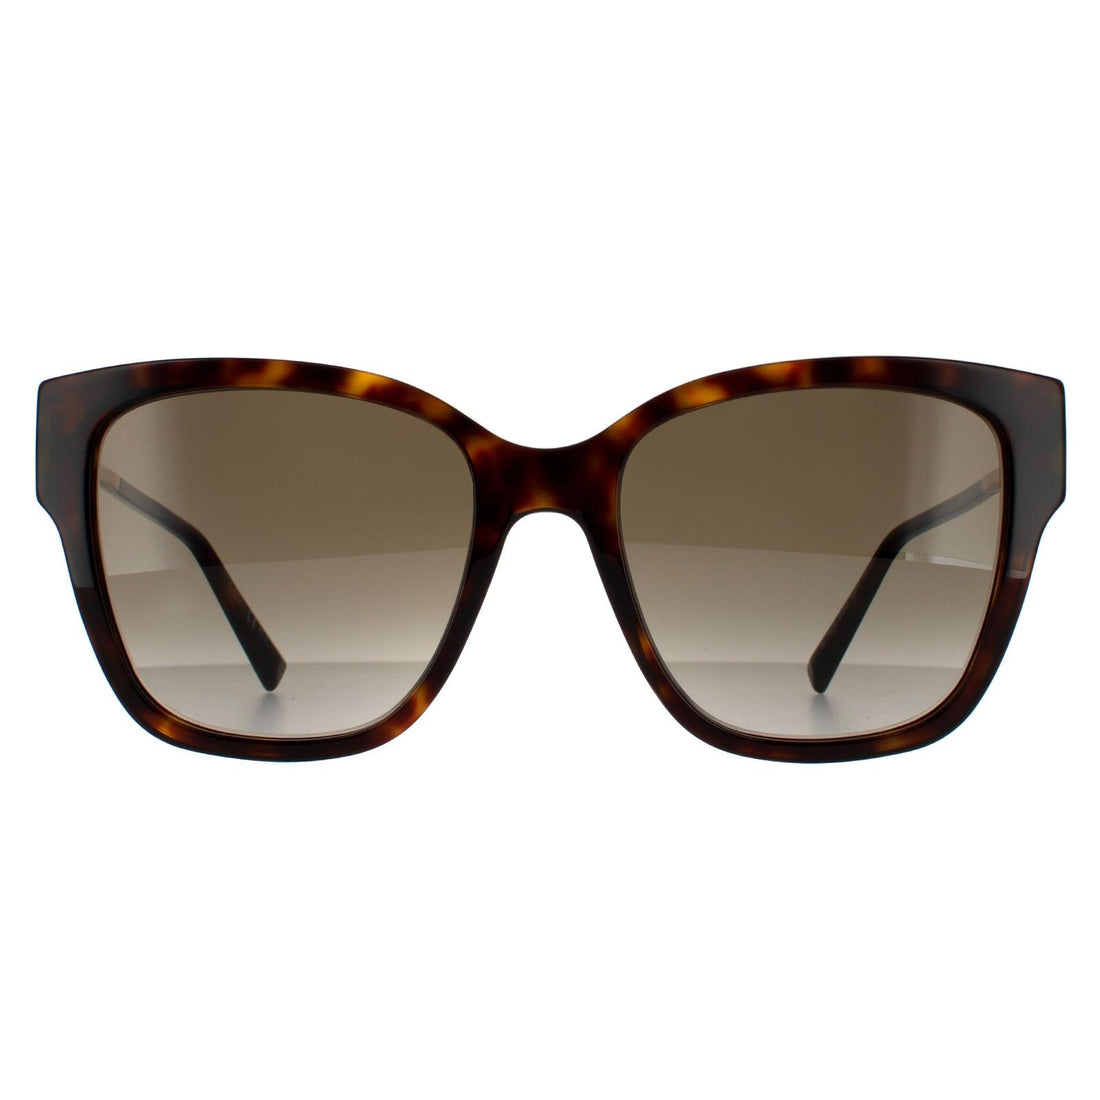 Givenchy GV7191/S Sunglasses Havana / Brown Gradient